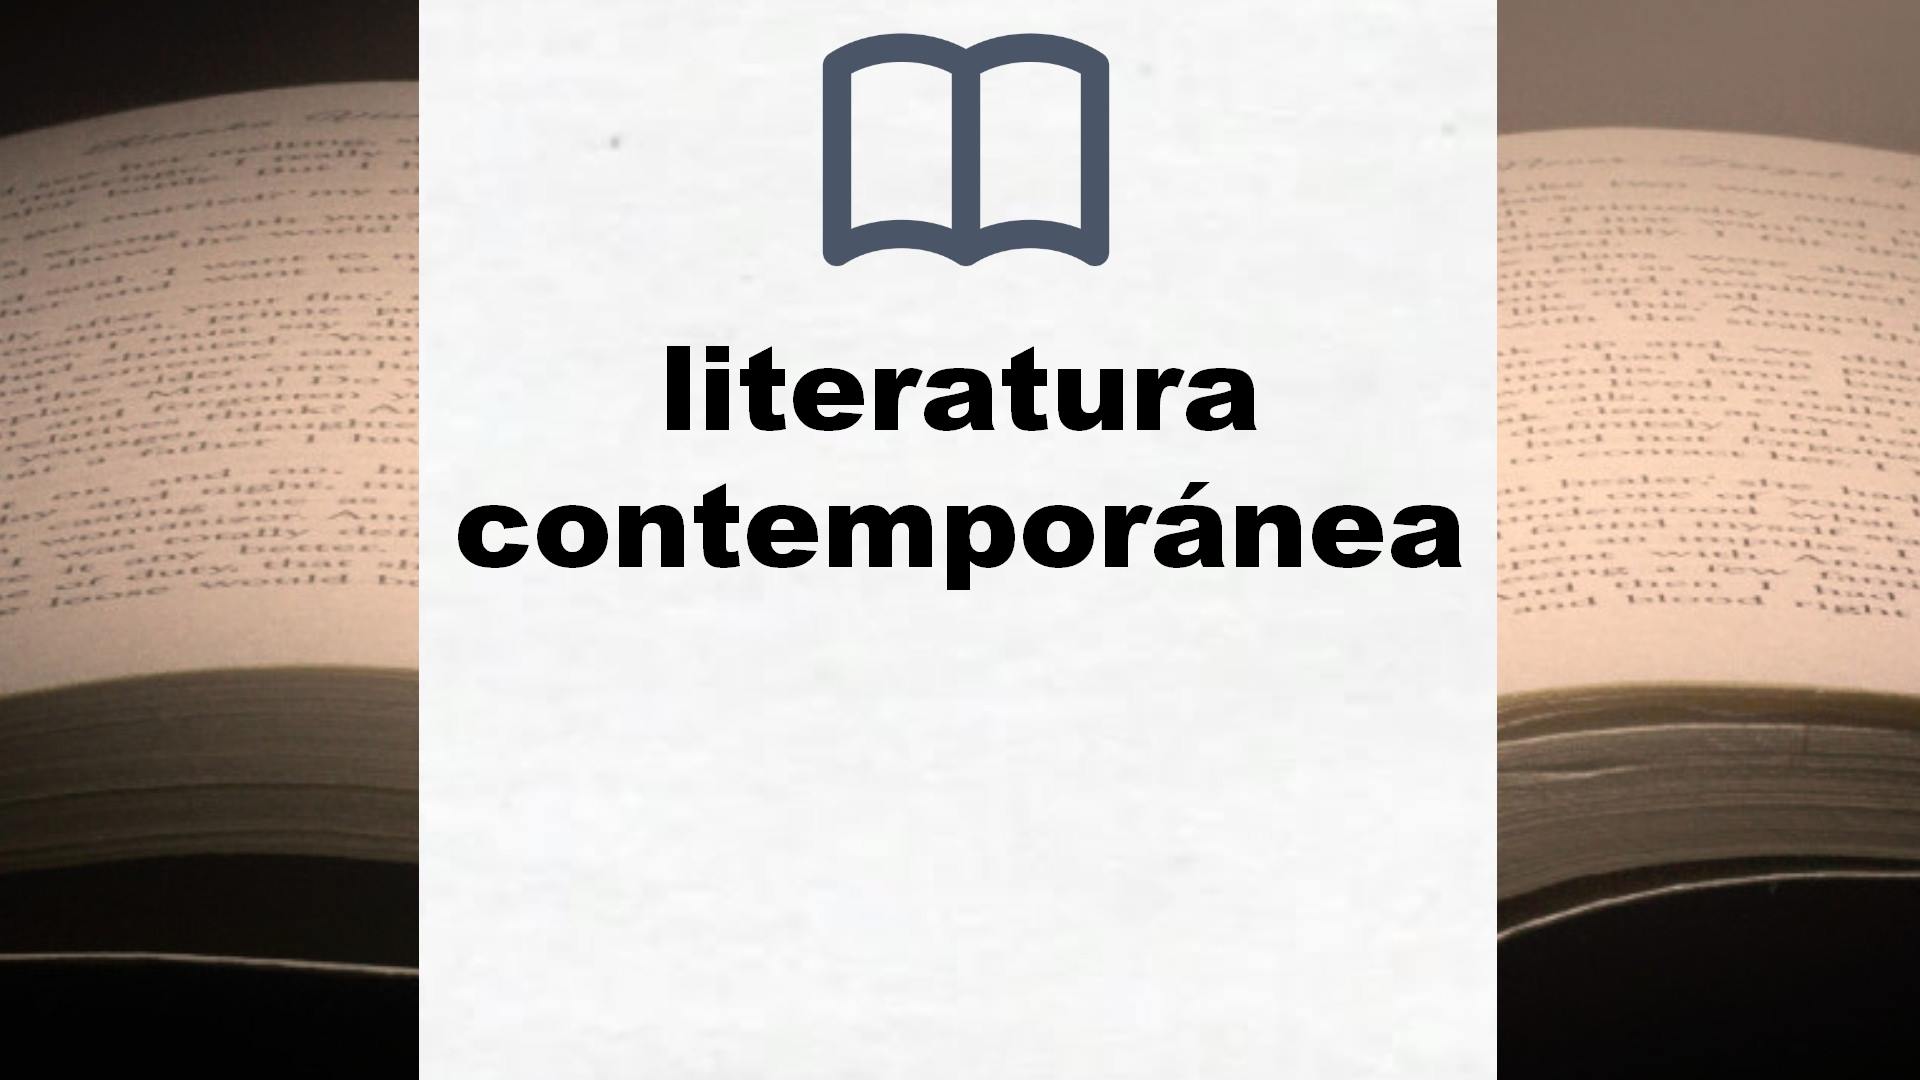 Libros sobre literatura contemporánea